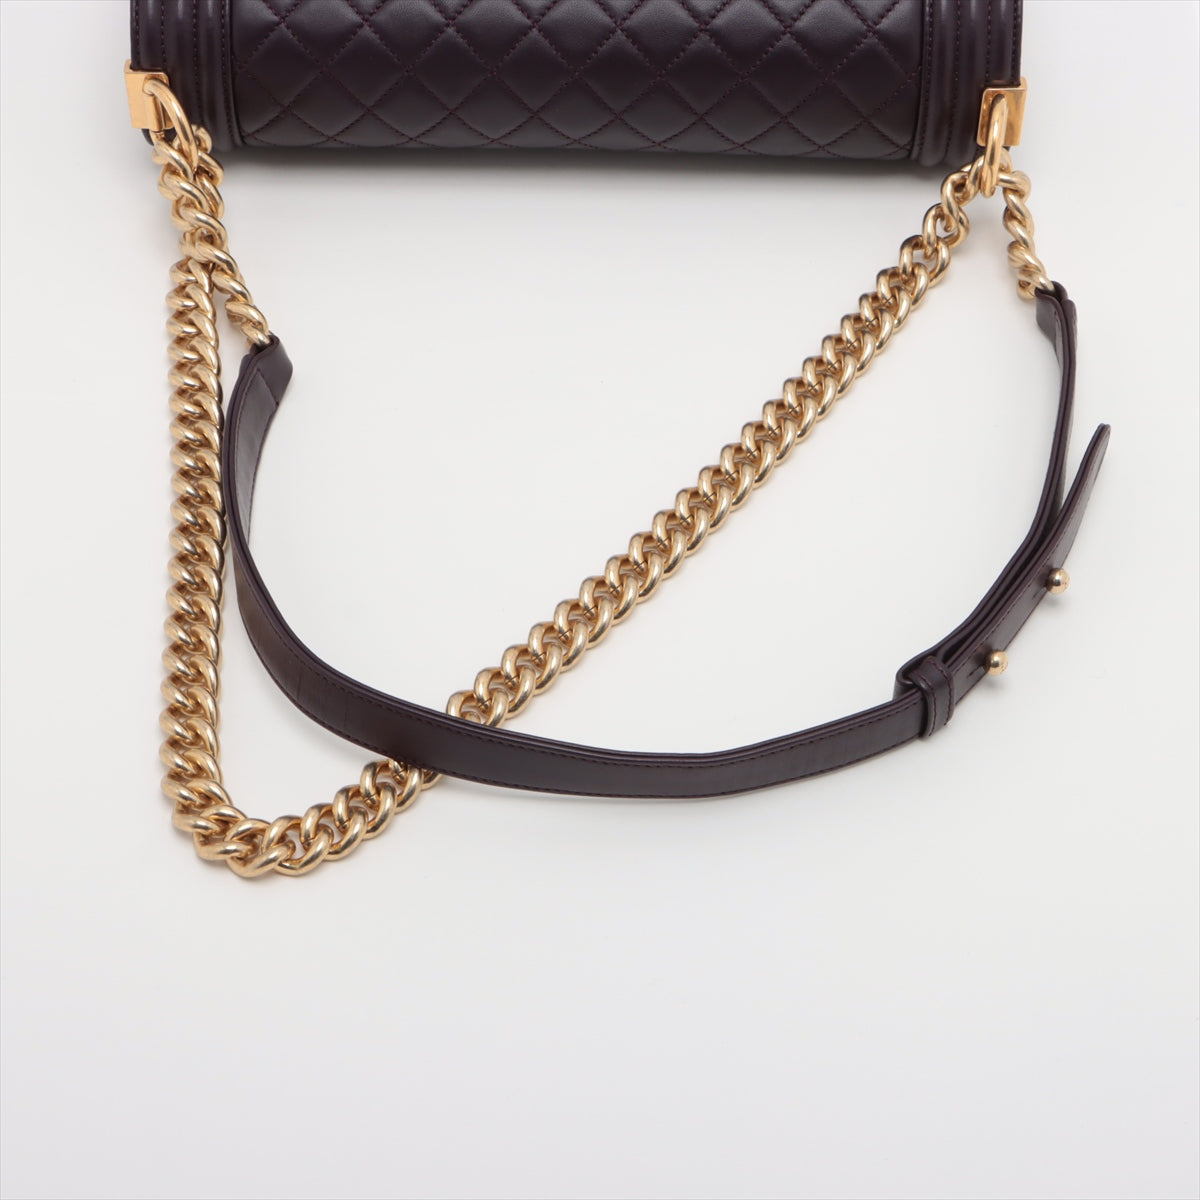 Chanel Boy Chanel Lambskin Chain shoulder bag Bordeaux Gold Metal fittings 23XXXXXX